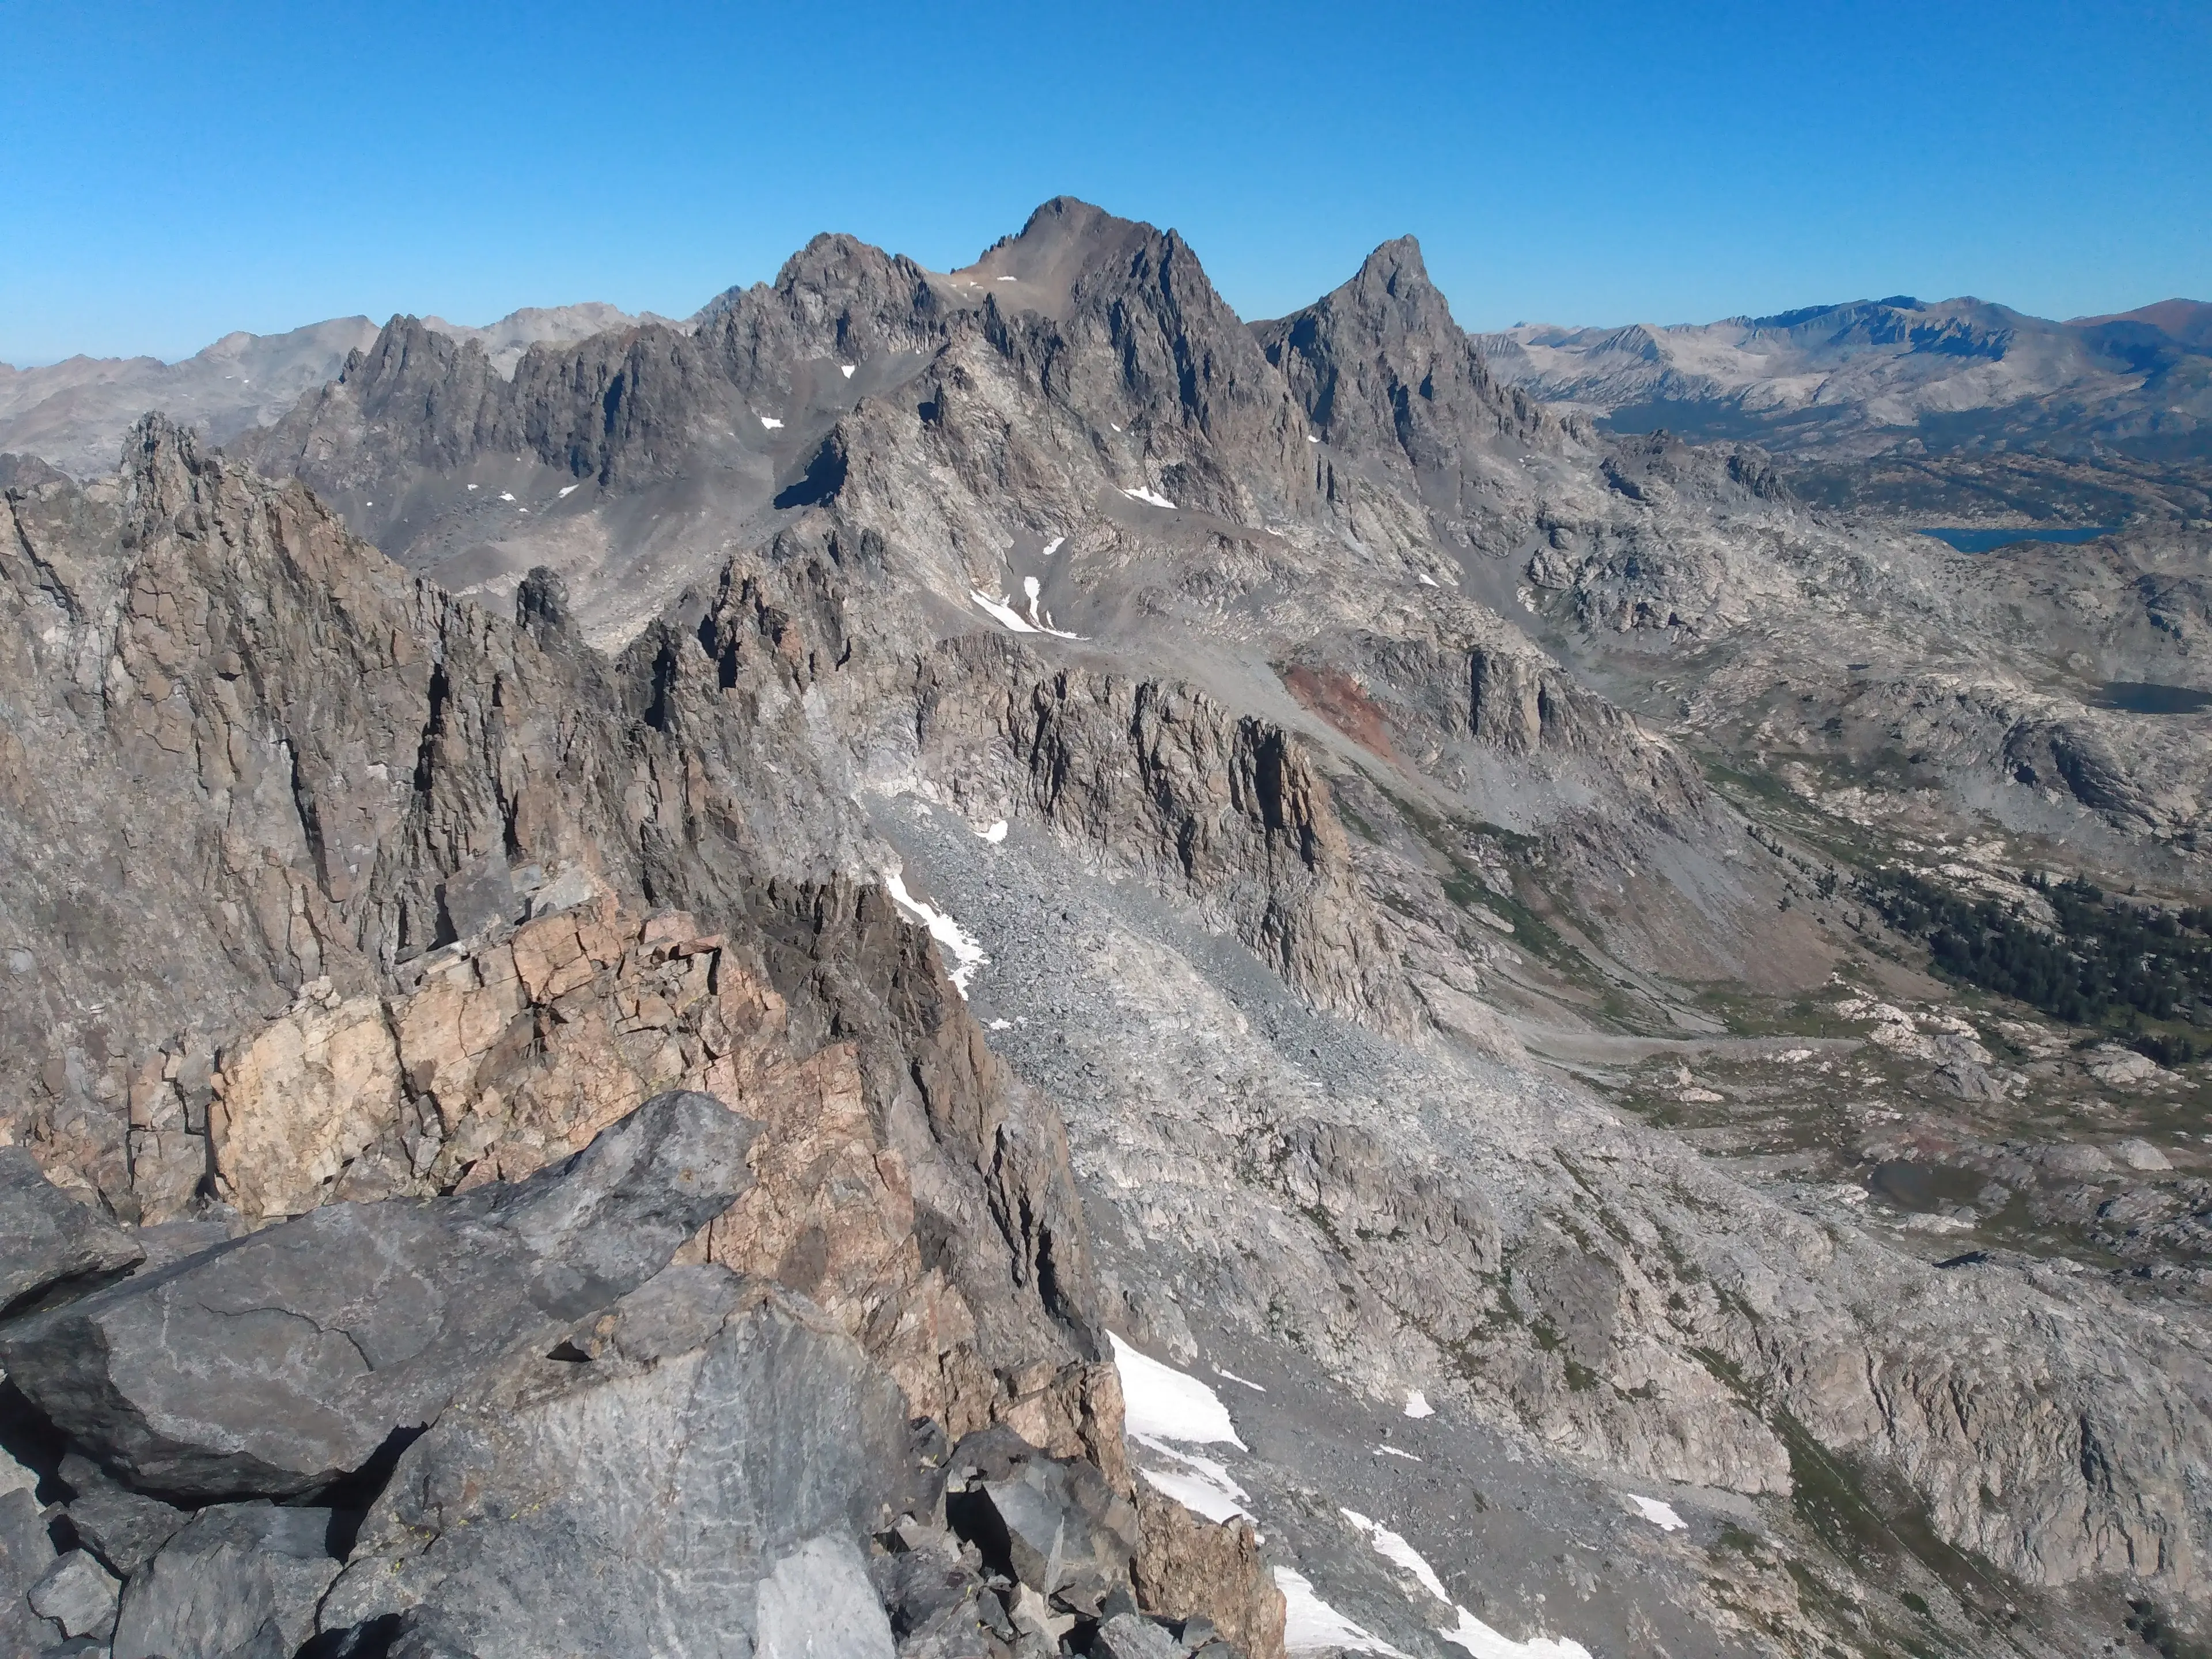 Mount Ritter (C-L) and Banner Peak (C-R)